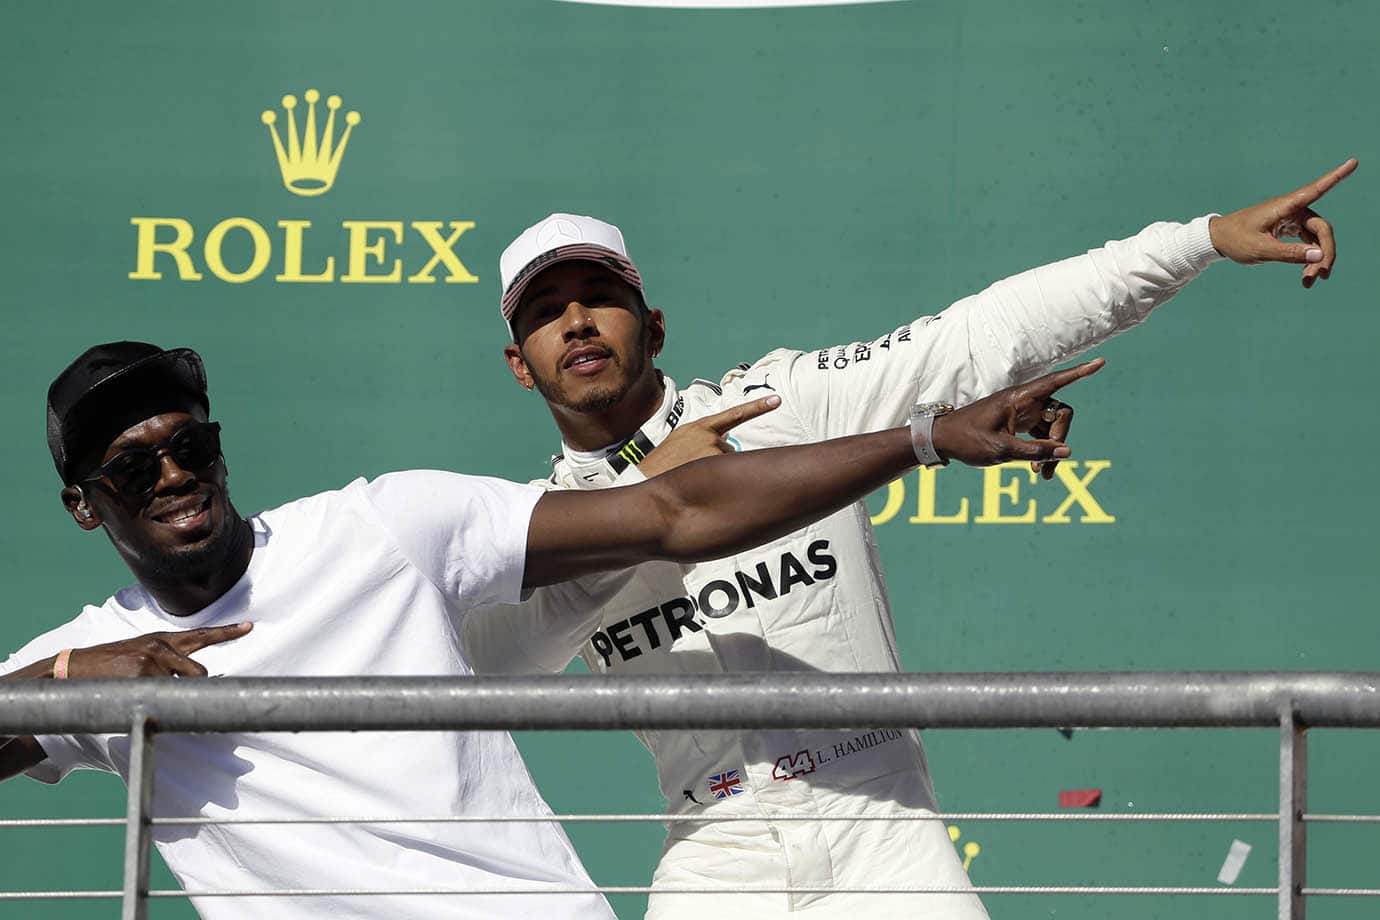 Hamilton vainqueur du Grand Prix des Etats-Unis 2017